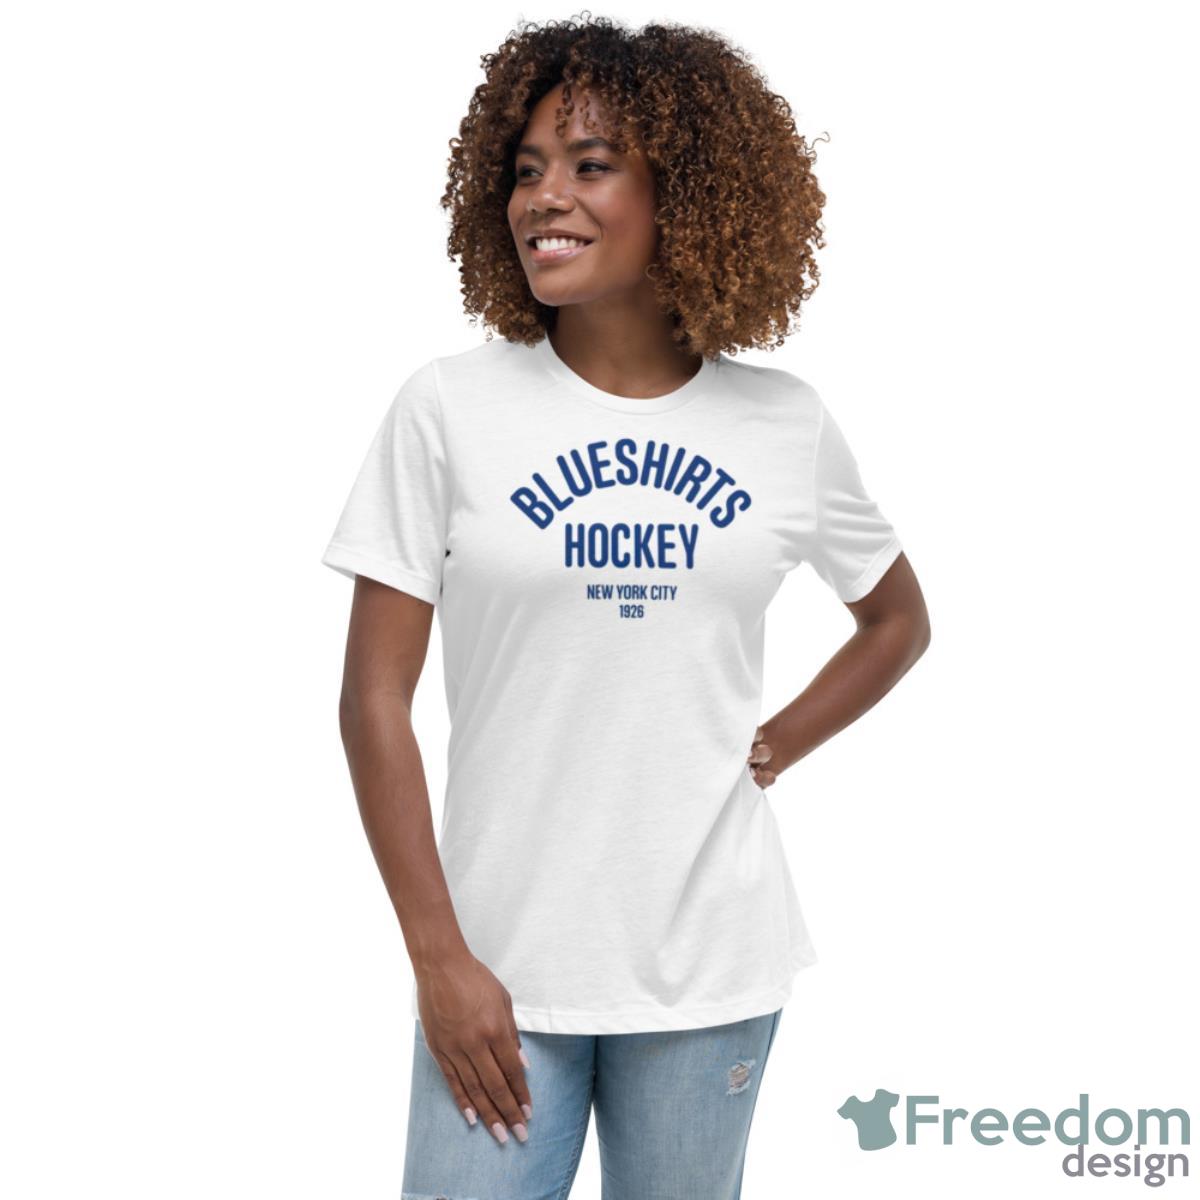 Blueshirts Hockey New York City 1926 Shirt